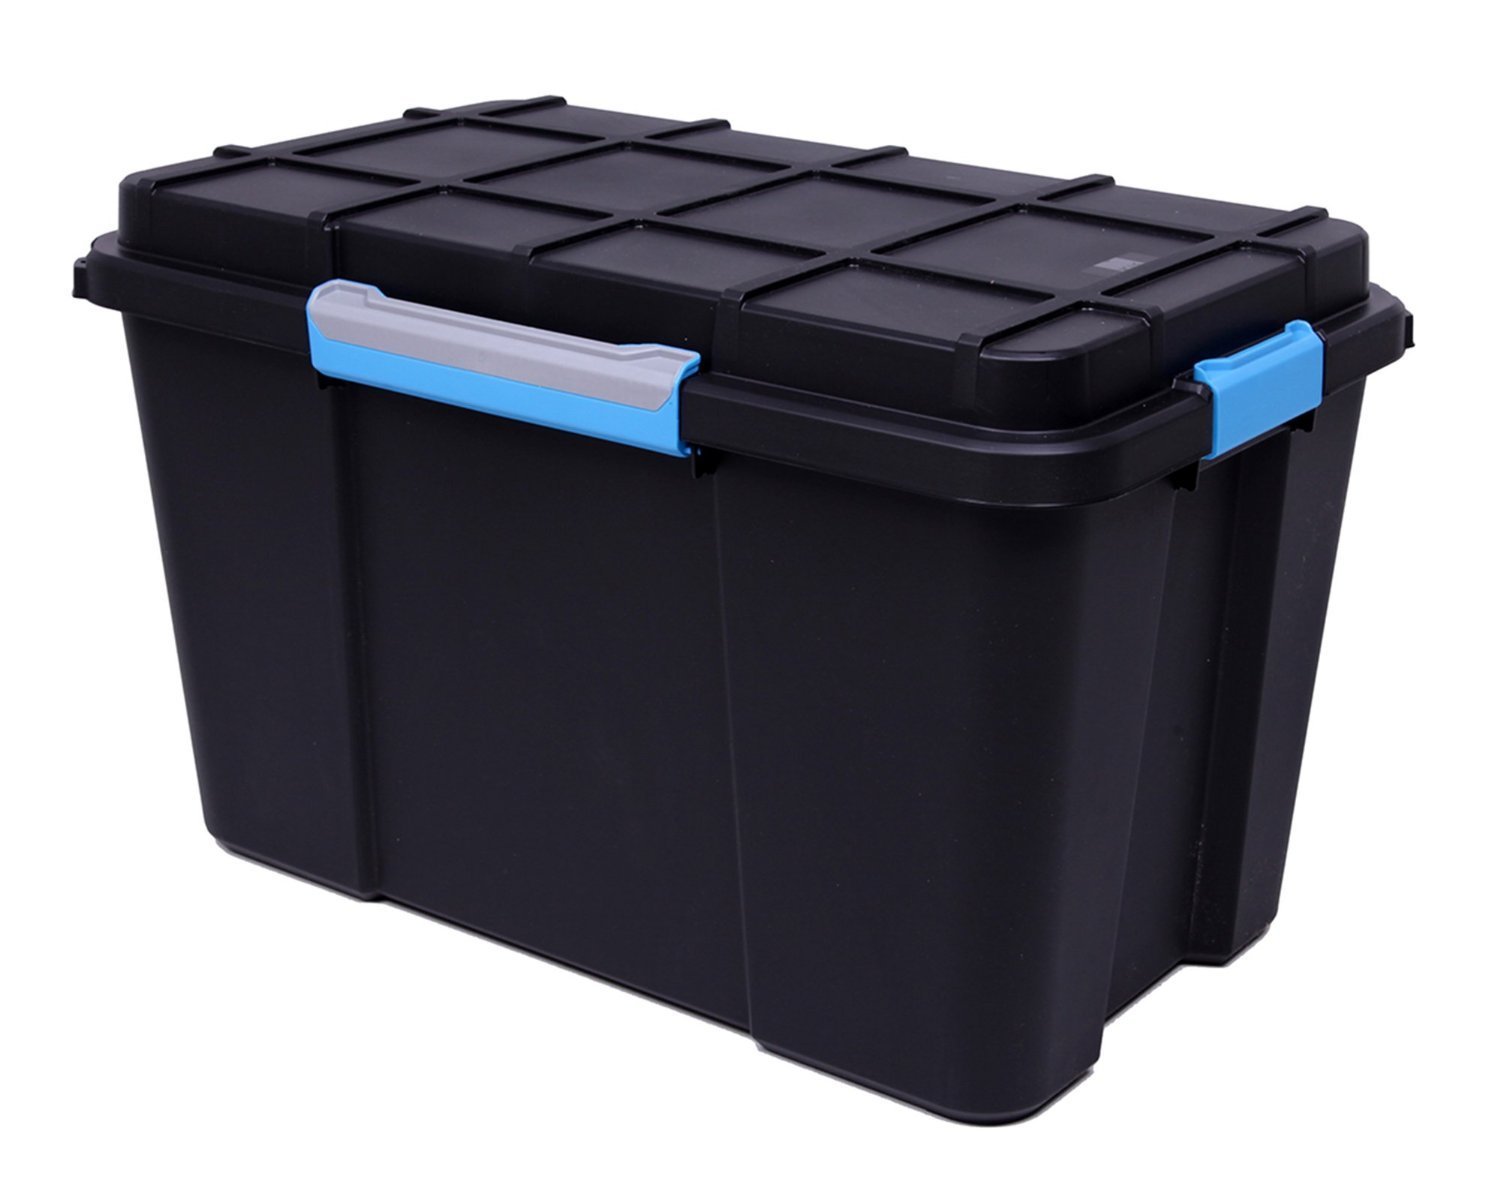 Scuba Box XL Black Water Resistant Storage Trunk